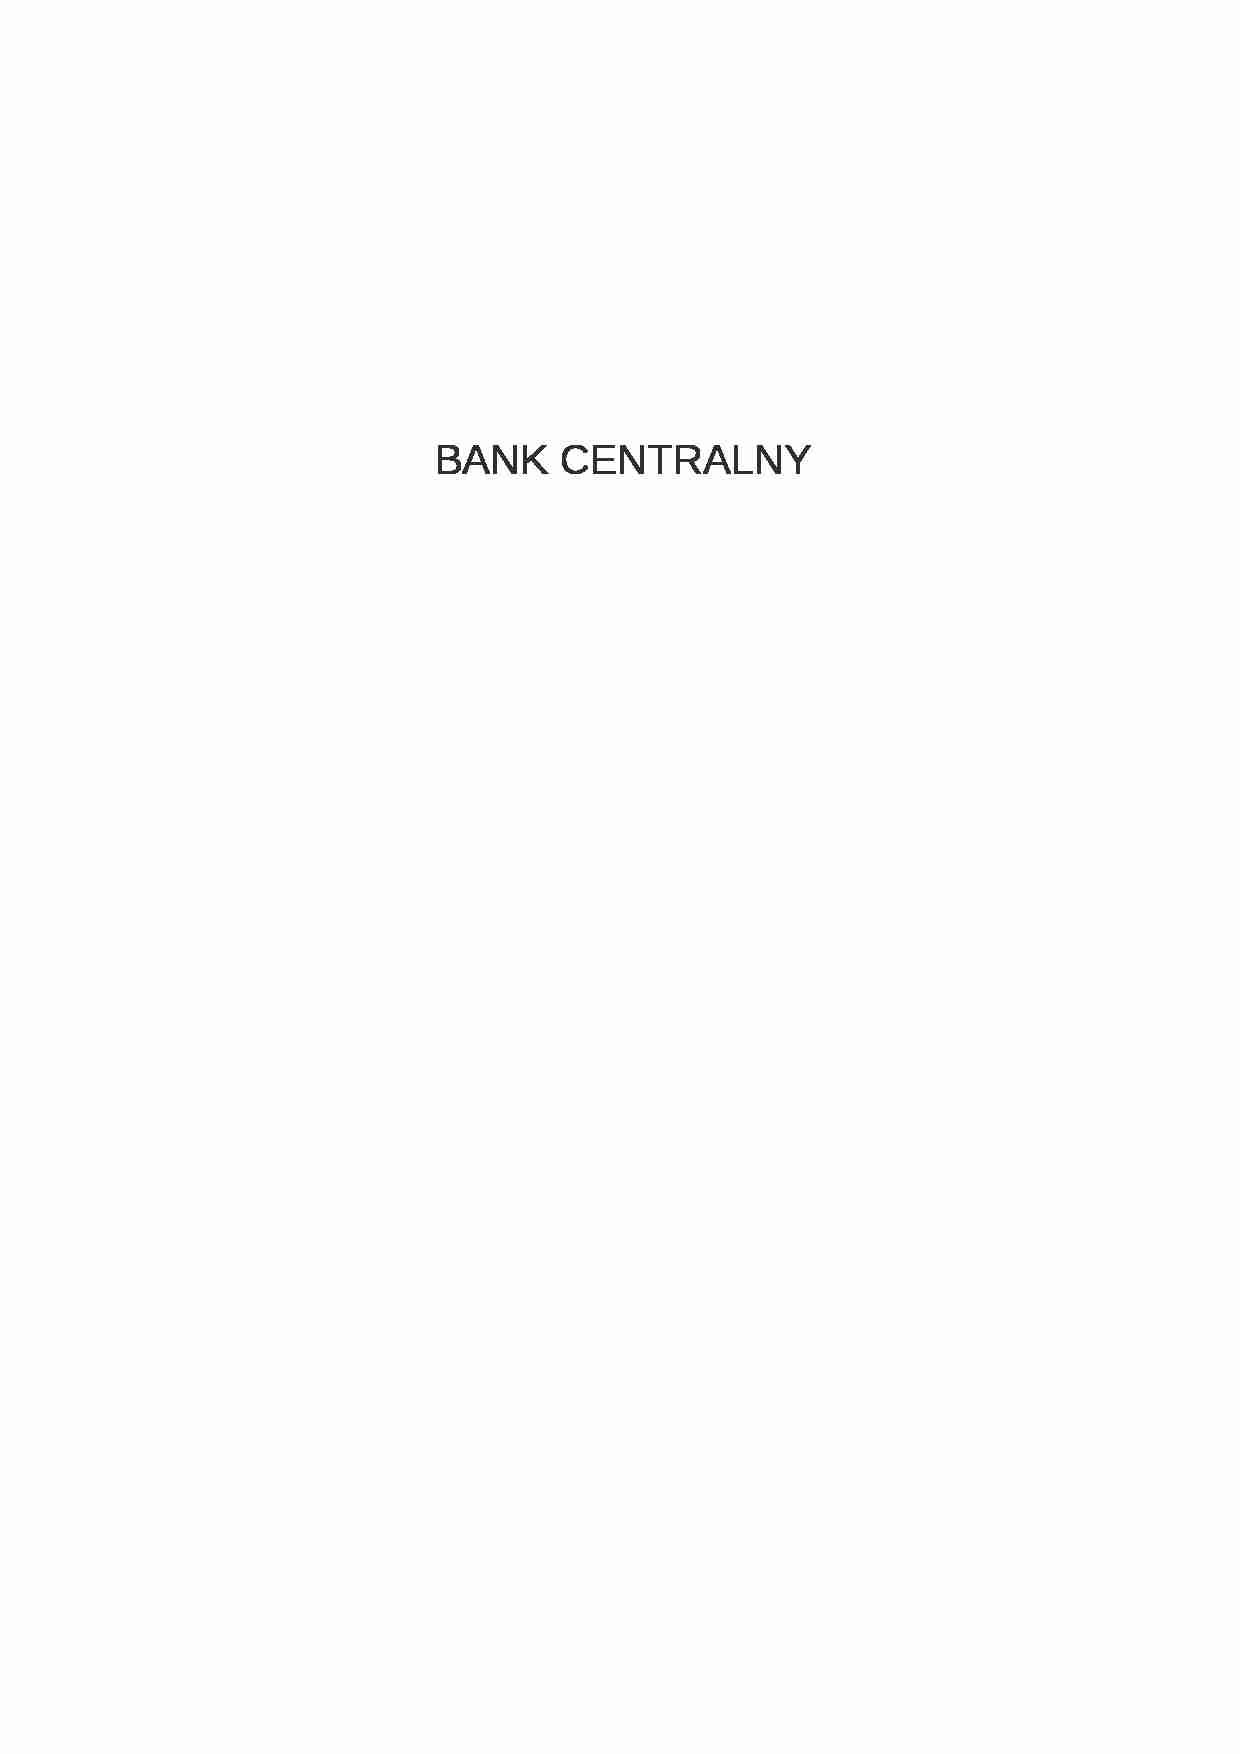 Bank centralny - Narodowy Bank Polski - strona 1